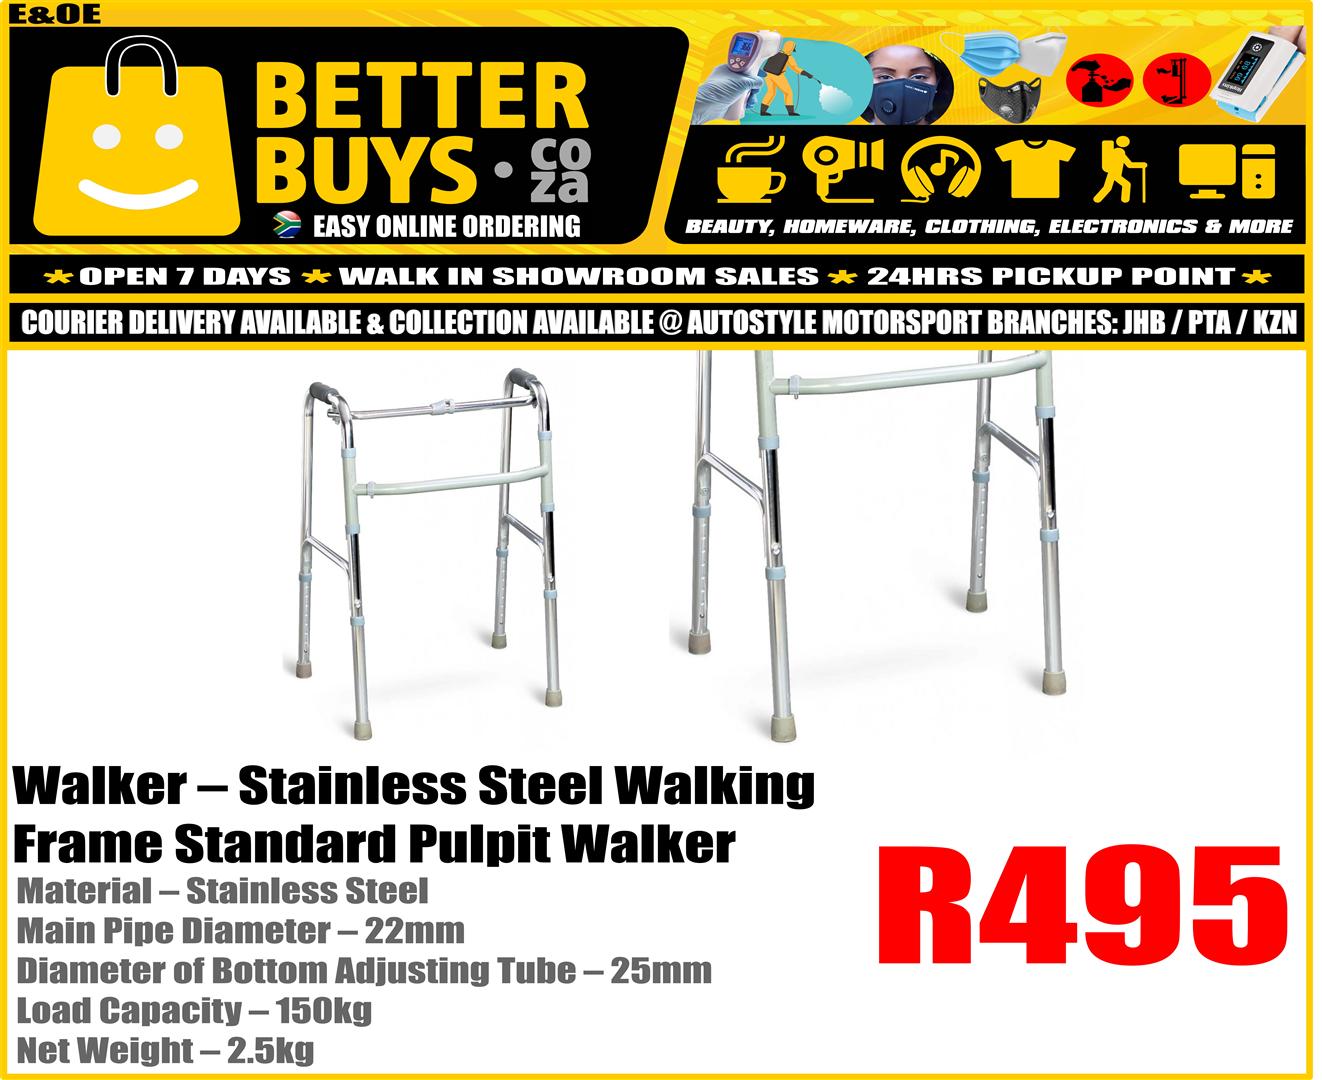 Stainless Steel Walking Frame Standard Pulpit Walker